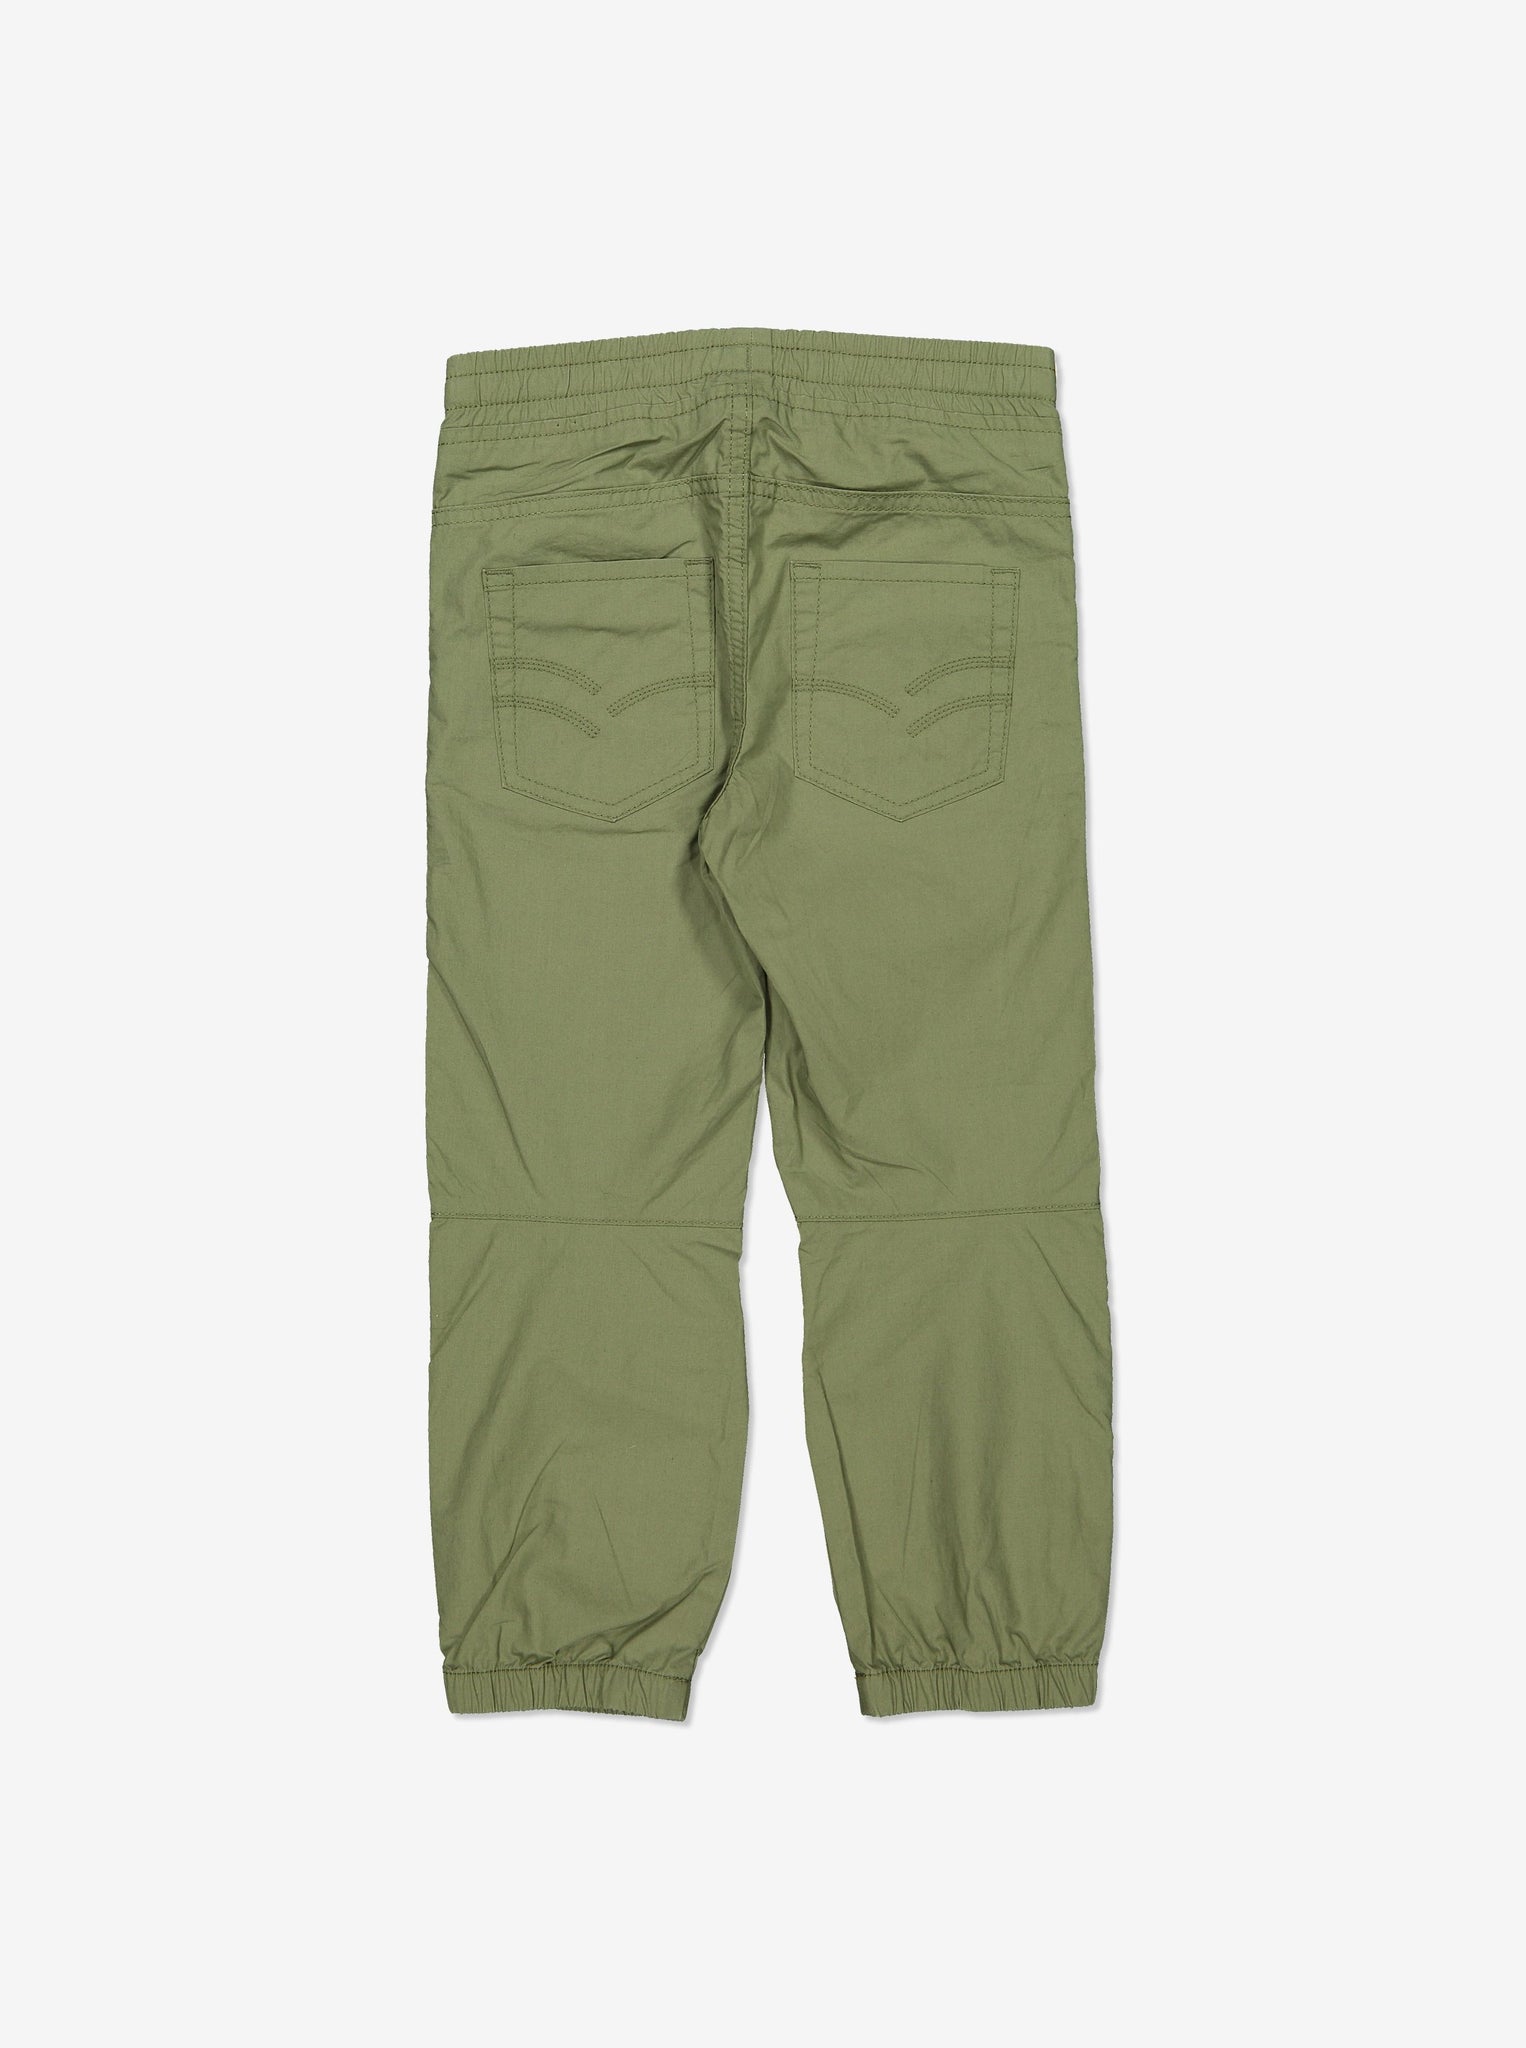 Boy Green Kids GOTS Organic Trousers